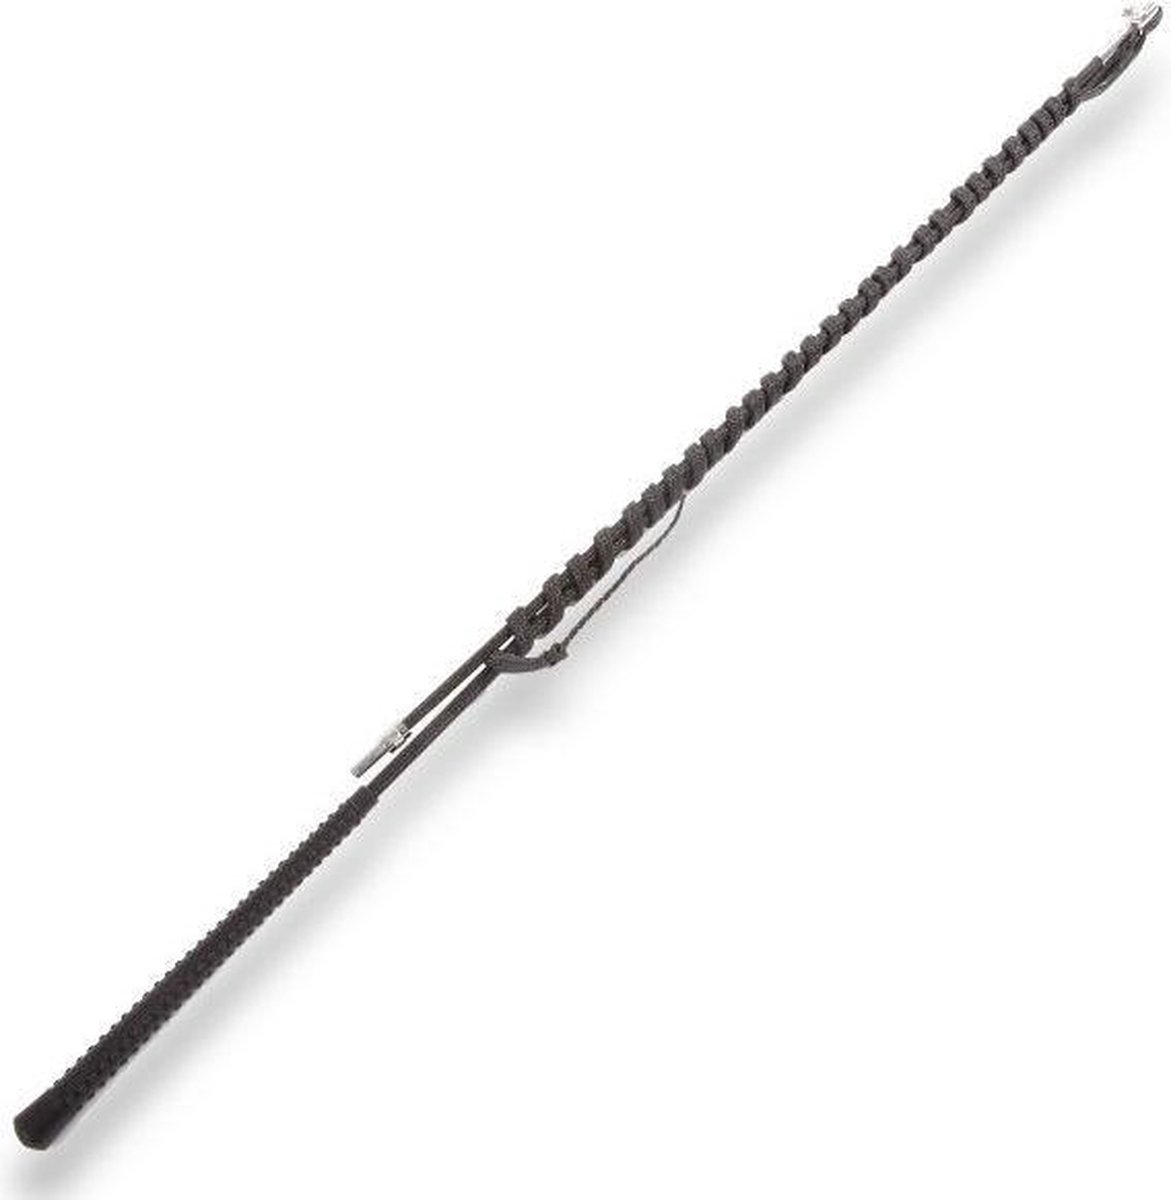 Hb longeerzweep - 2 delig fiberglas - zwart - 180 cm - HB Ruitersport